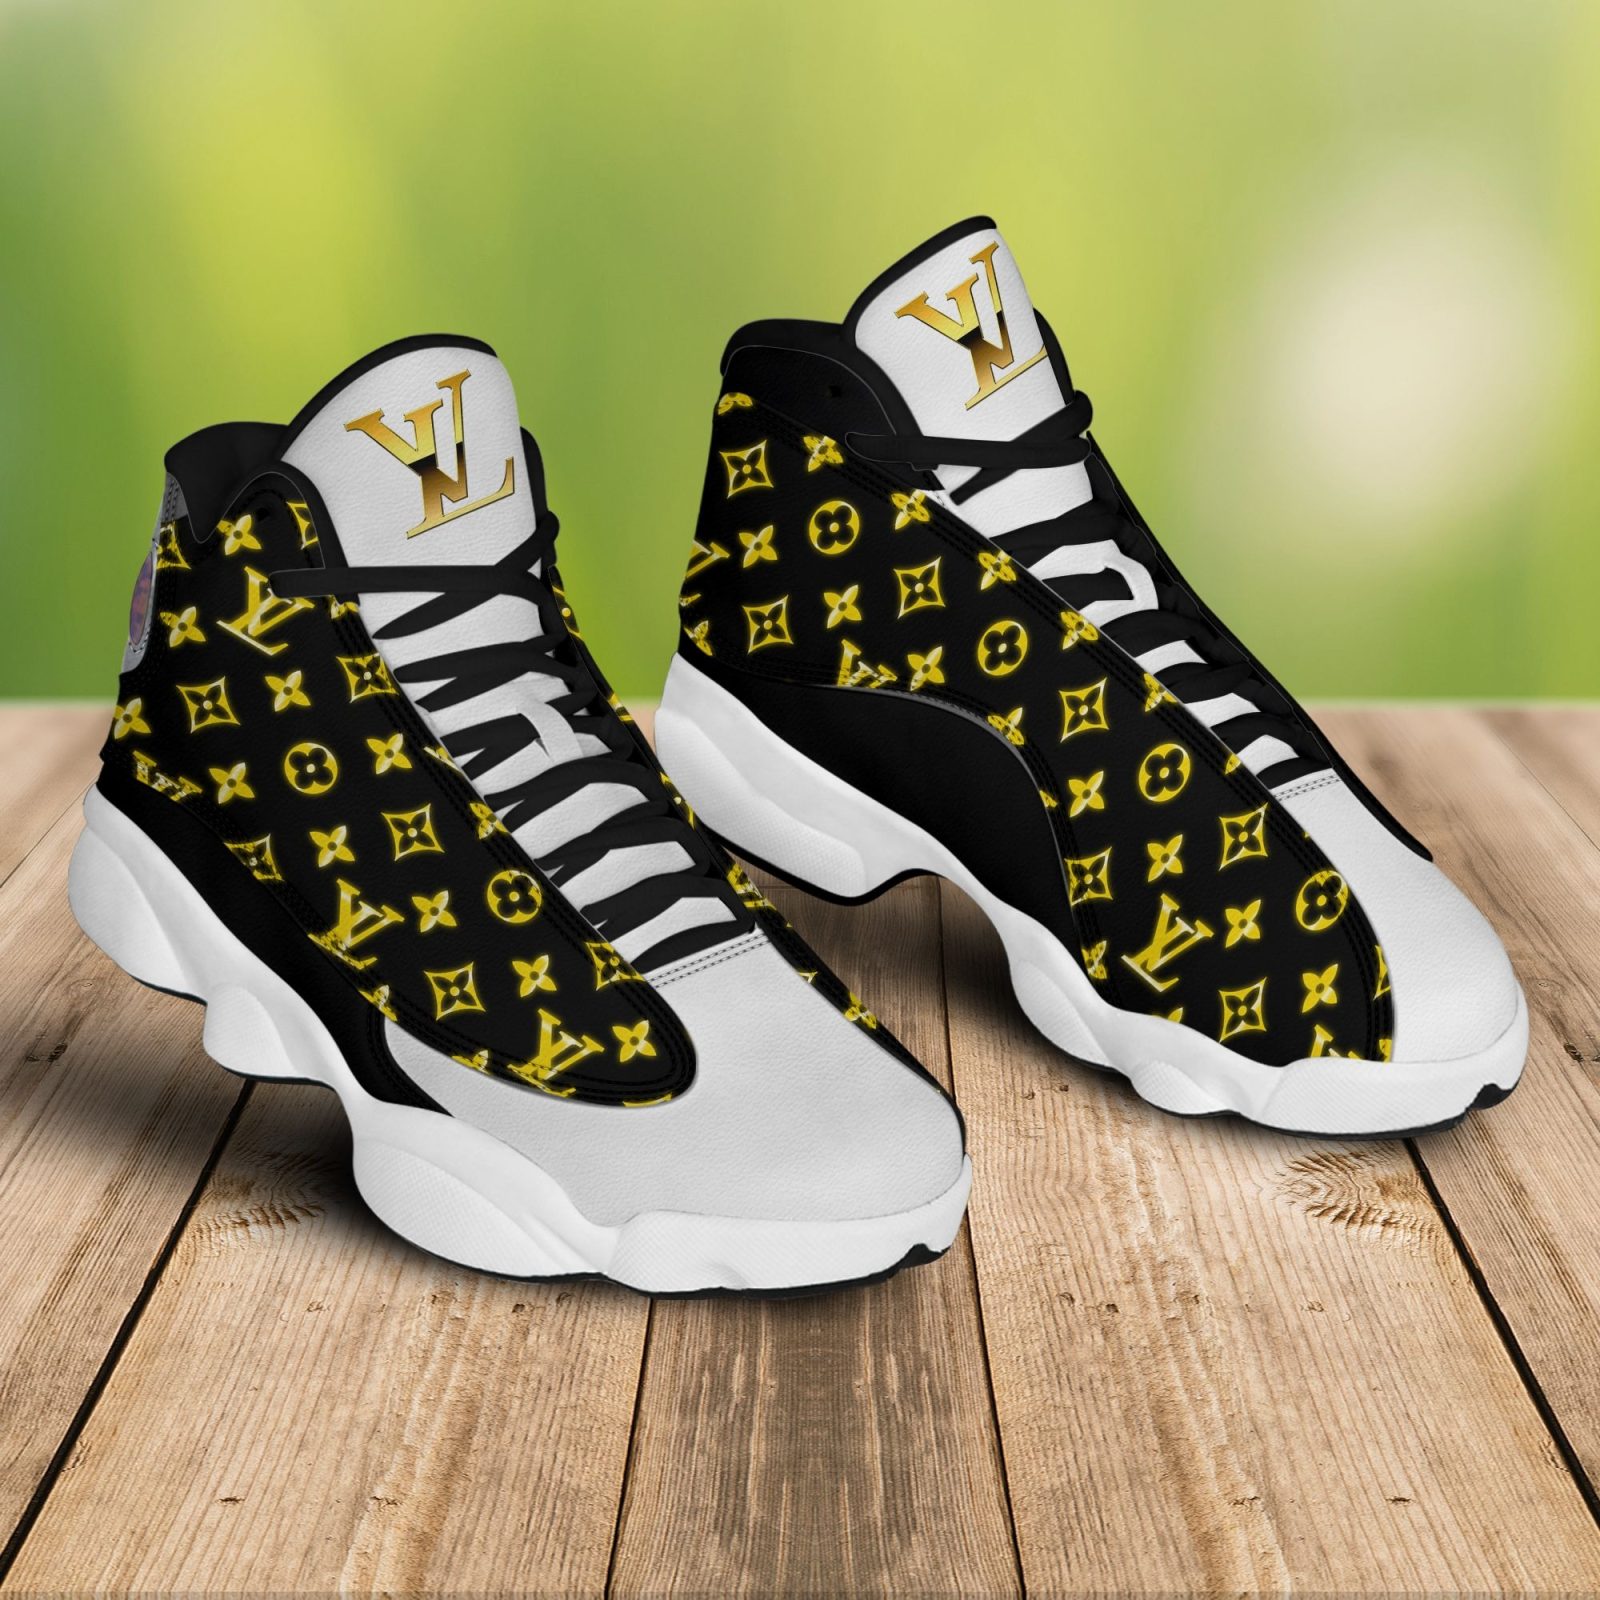 Louis Vuitton Basketball Air Jordan 13 Sneaker Shoes - Banantees